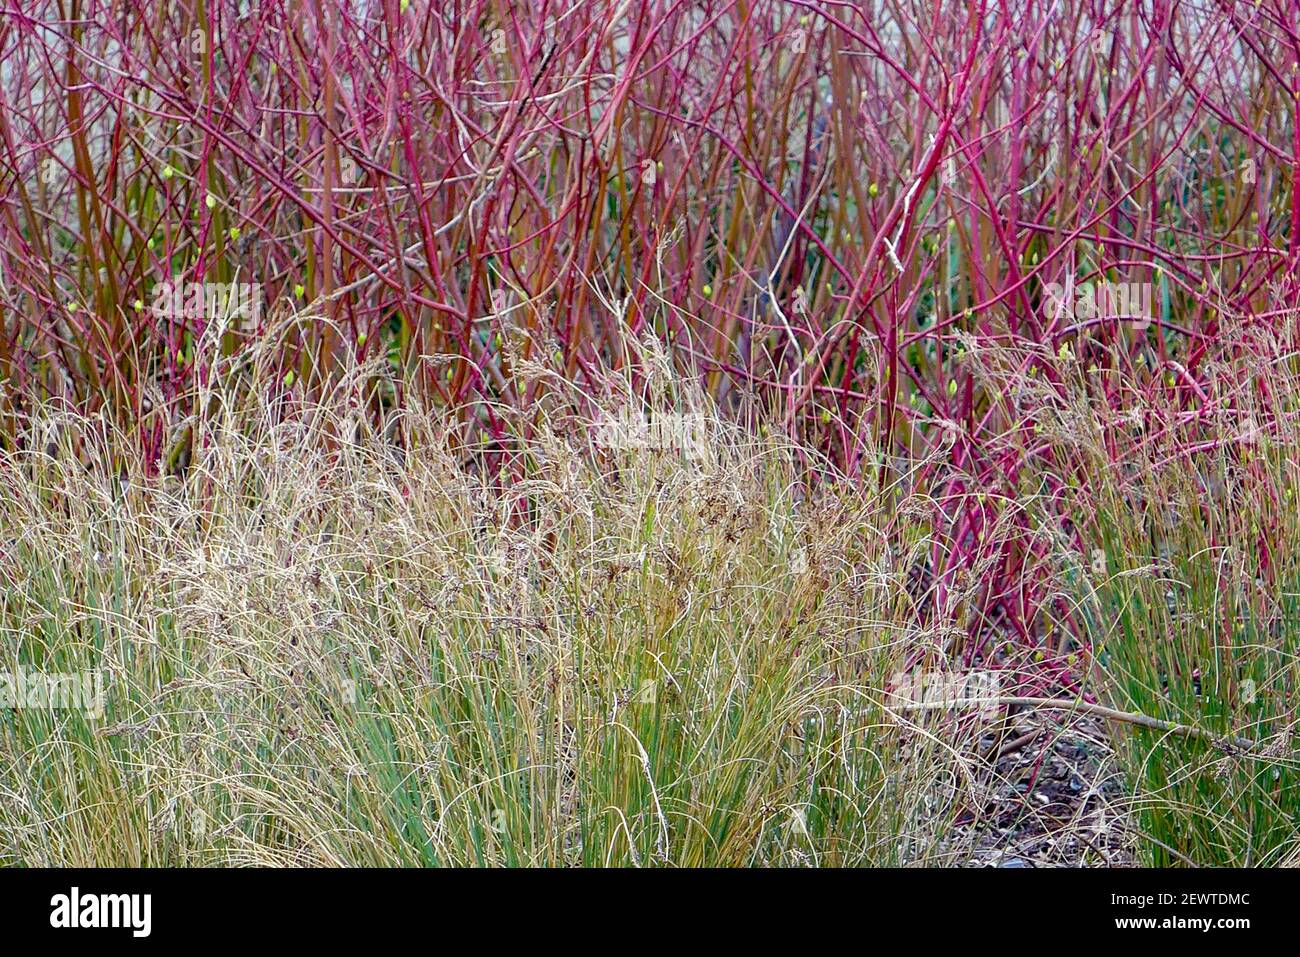 Bush of Common Dogwood, Cornus sanguinea, and Tufted Hair Grass, Deschampsia cespitosa, Stock Photo